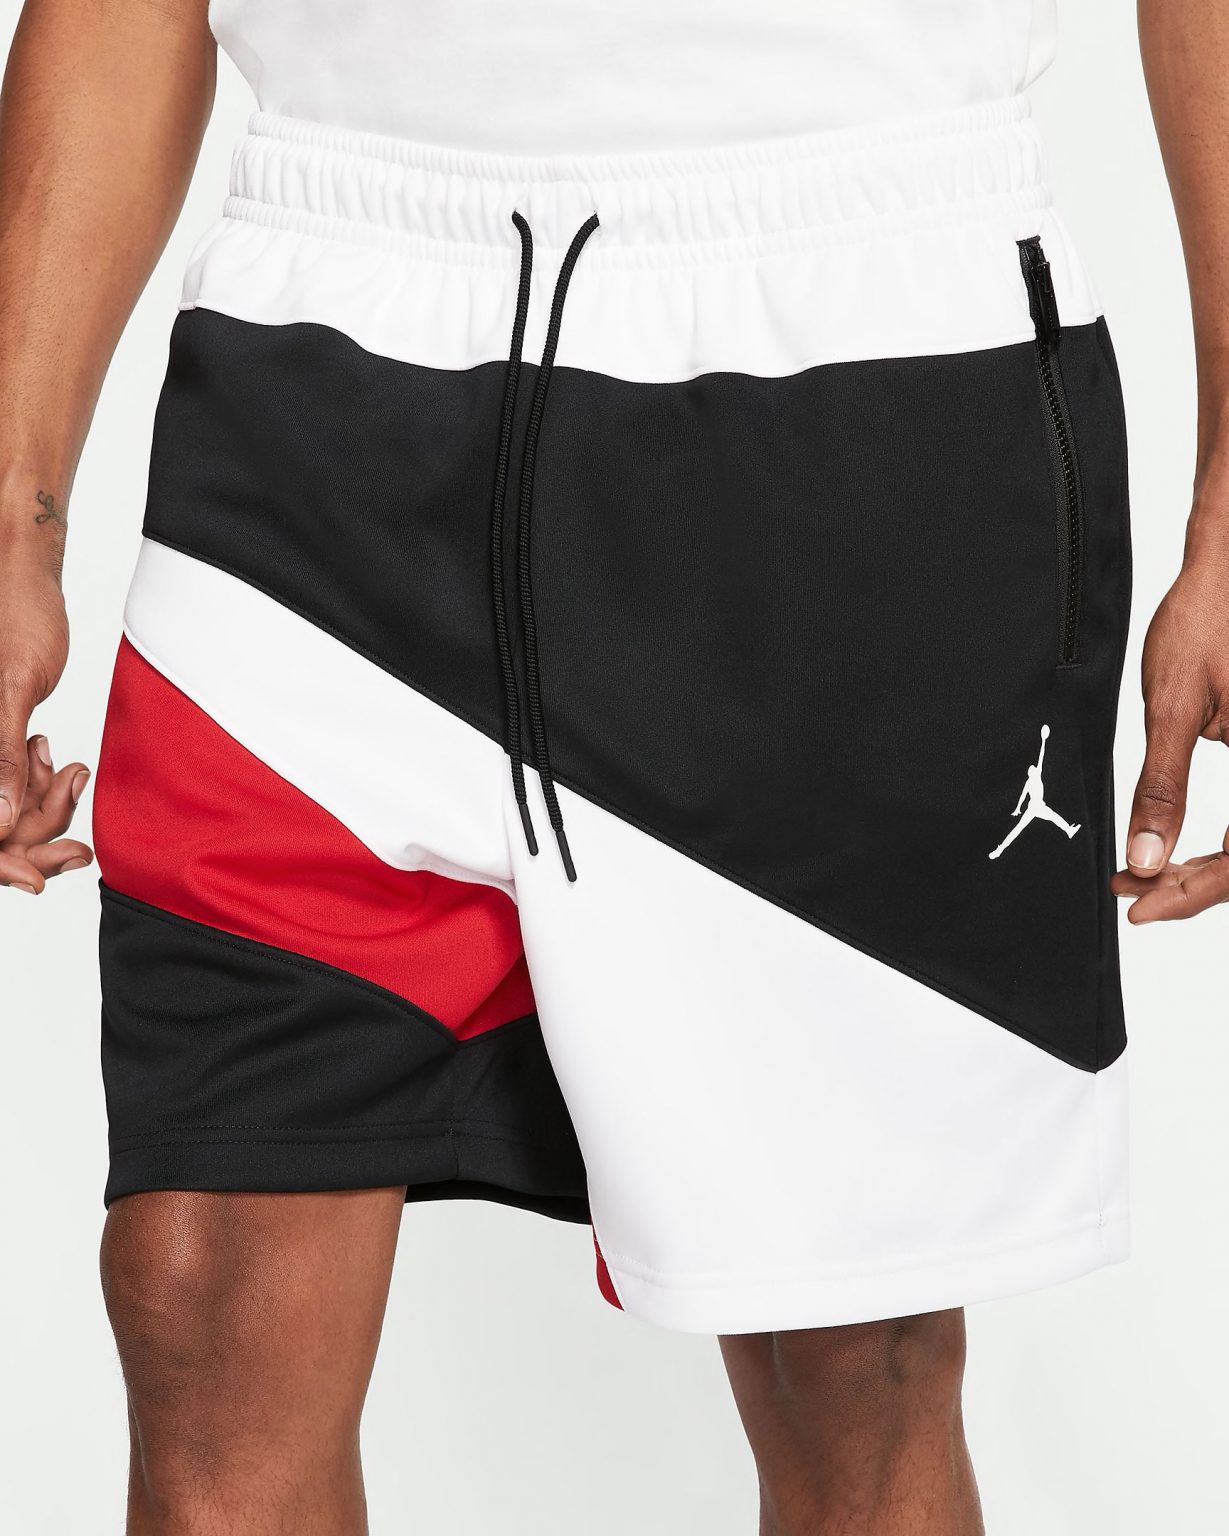 Air Jordan 5 Top 3 Shorts to Match | SportFits.com